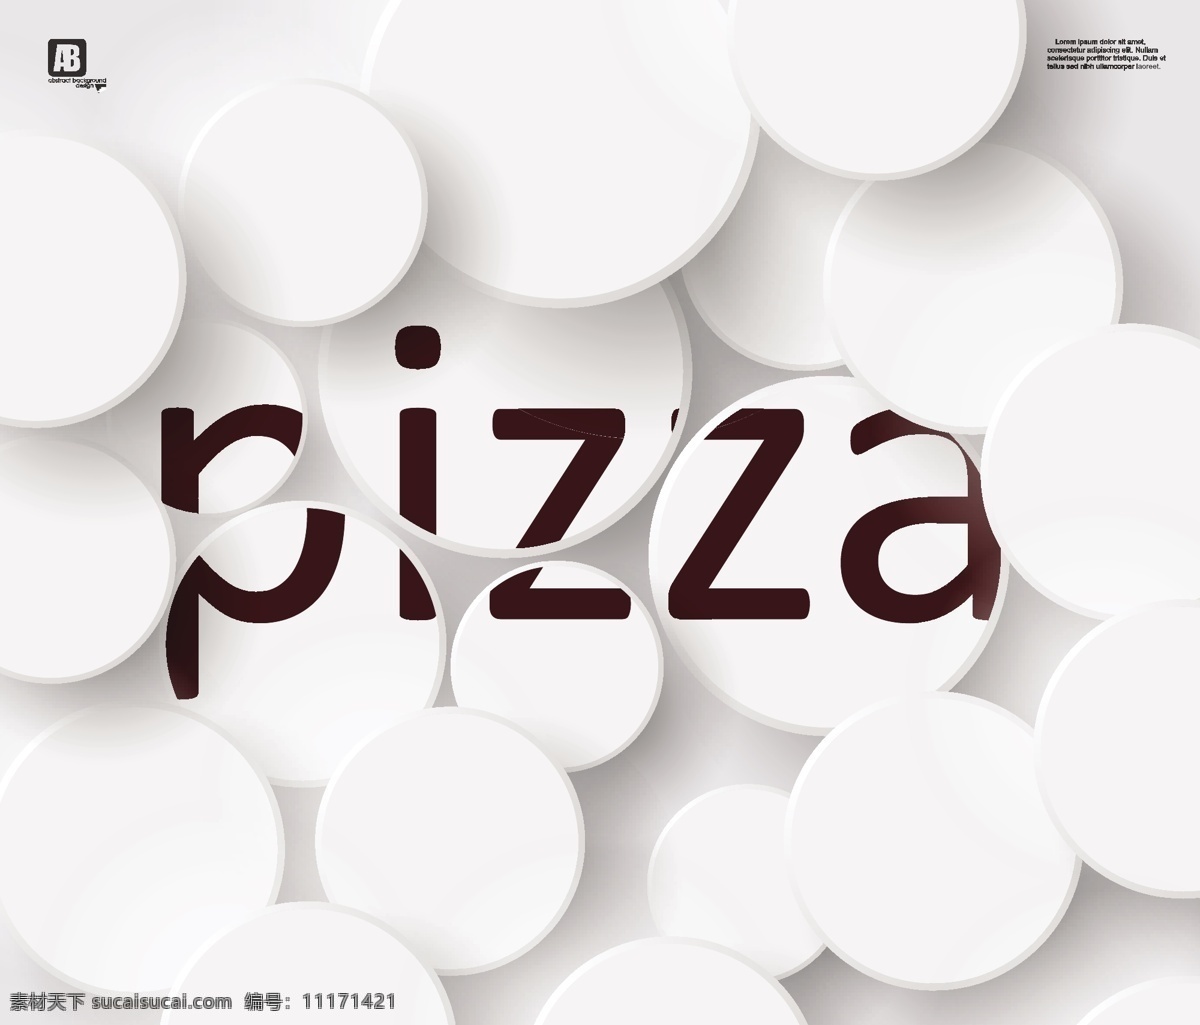 pizza 字母 立体 背景 圆圈 立体背景 立体圆圈 书画文字 文化艺术 矢量素材 白色